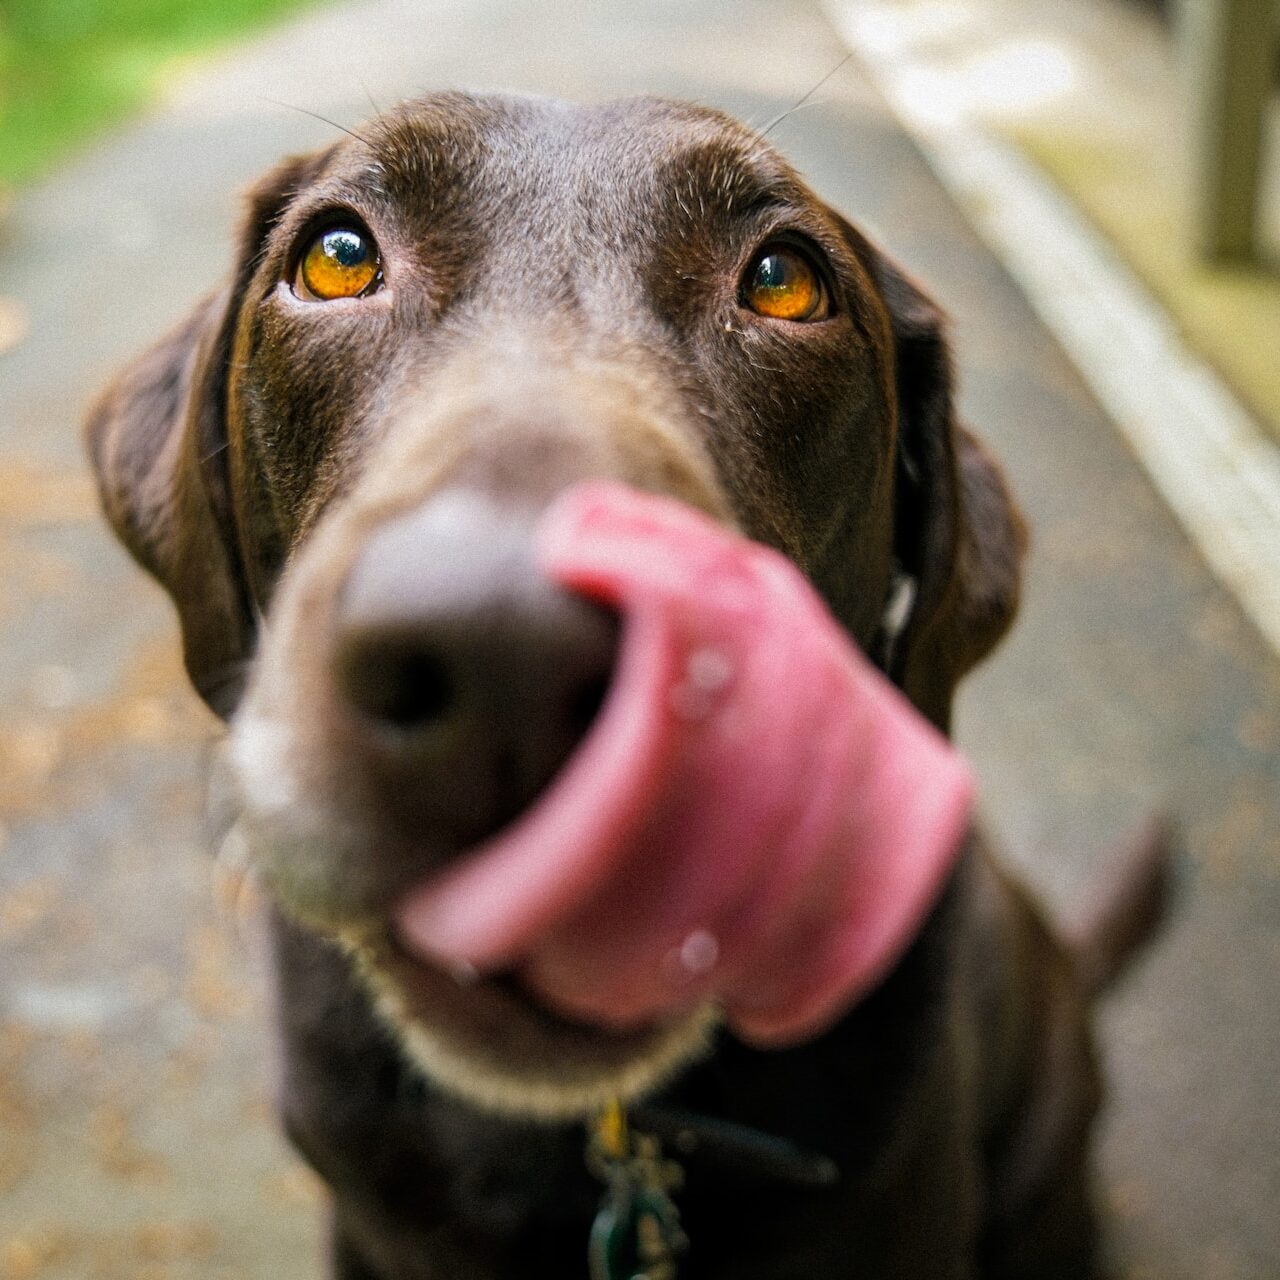 dog eating a treat